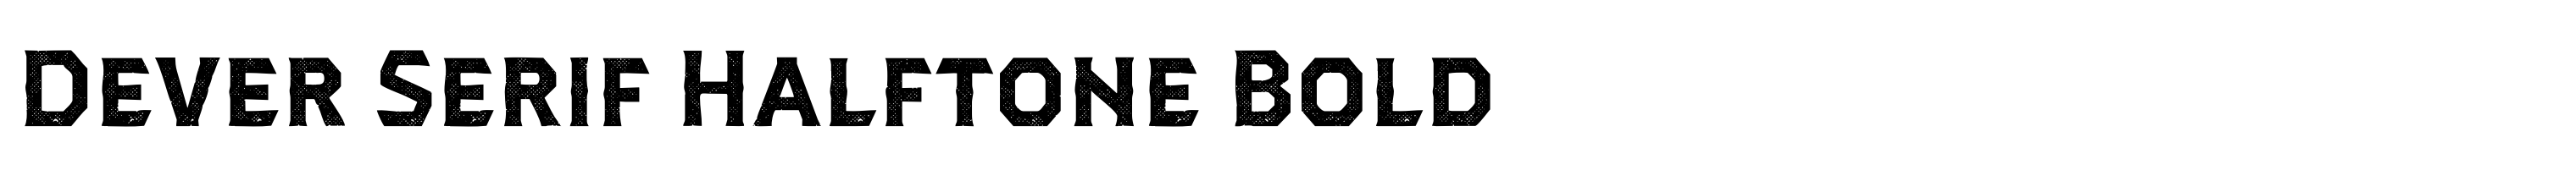 Dever Serif Halftone Bold